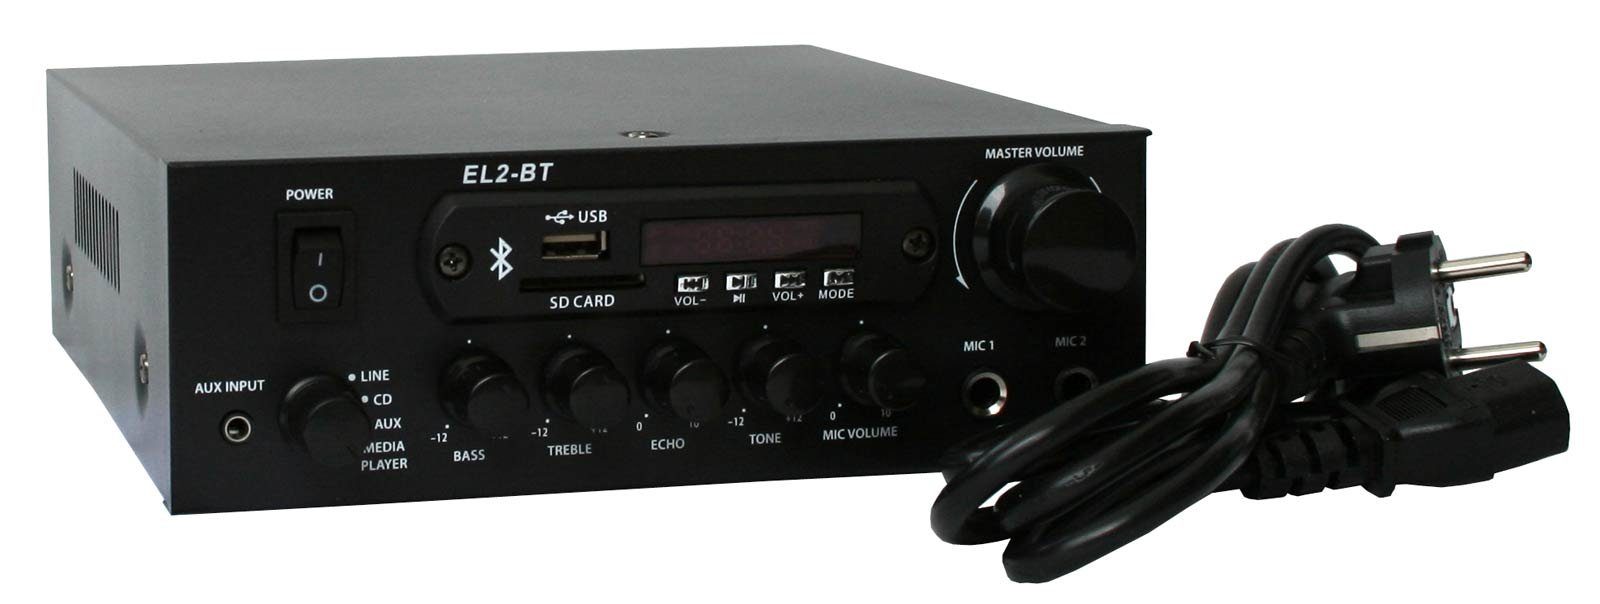 USB/SD, FM-Radio, 2, 25,00 (Anzahl Audioverstärker Bluetooth-Empfänger, Karaoke-fähig) Kanäle: Class-D, EL2-BT W, E-Lektron